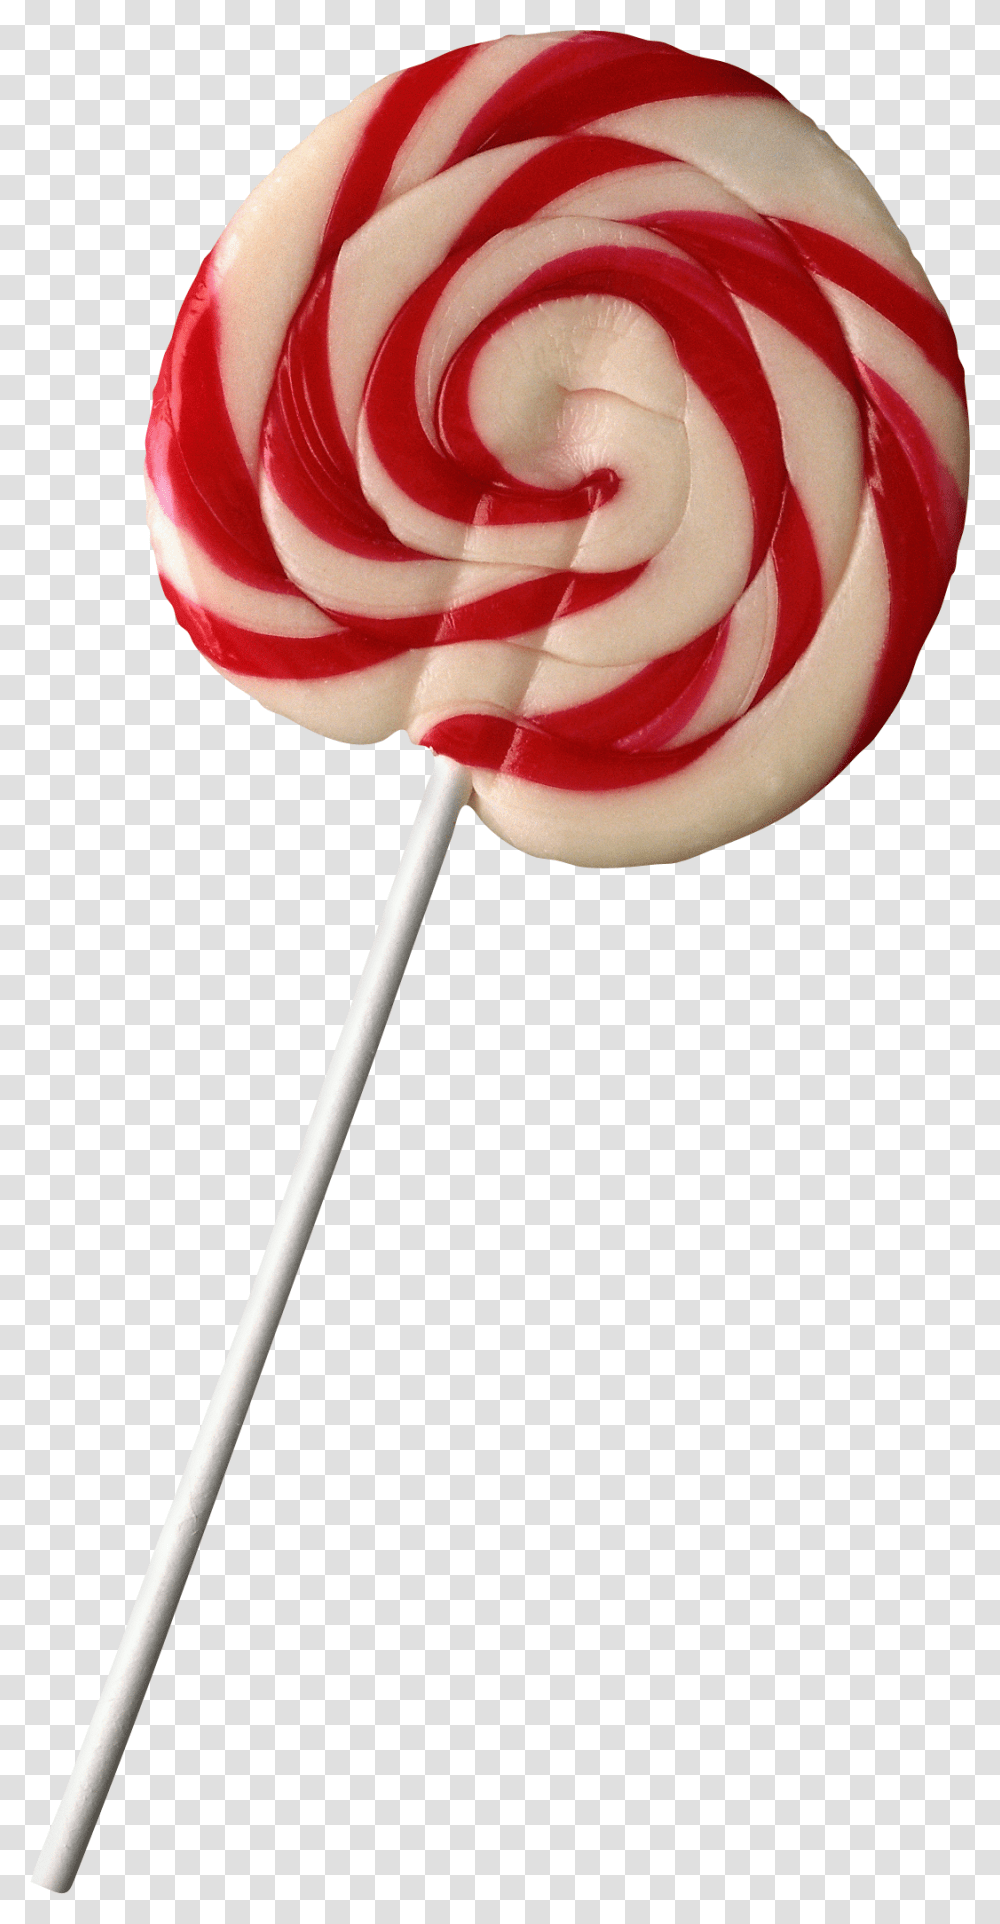 Lollipop Dessert Candy Lollipop, Food, Sweets, Confectionery, Rose Transparent Png